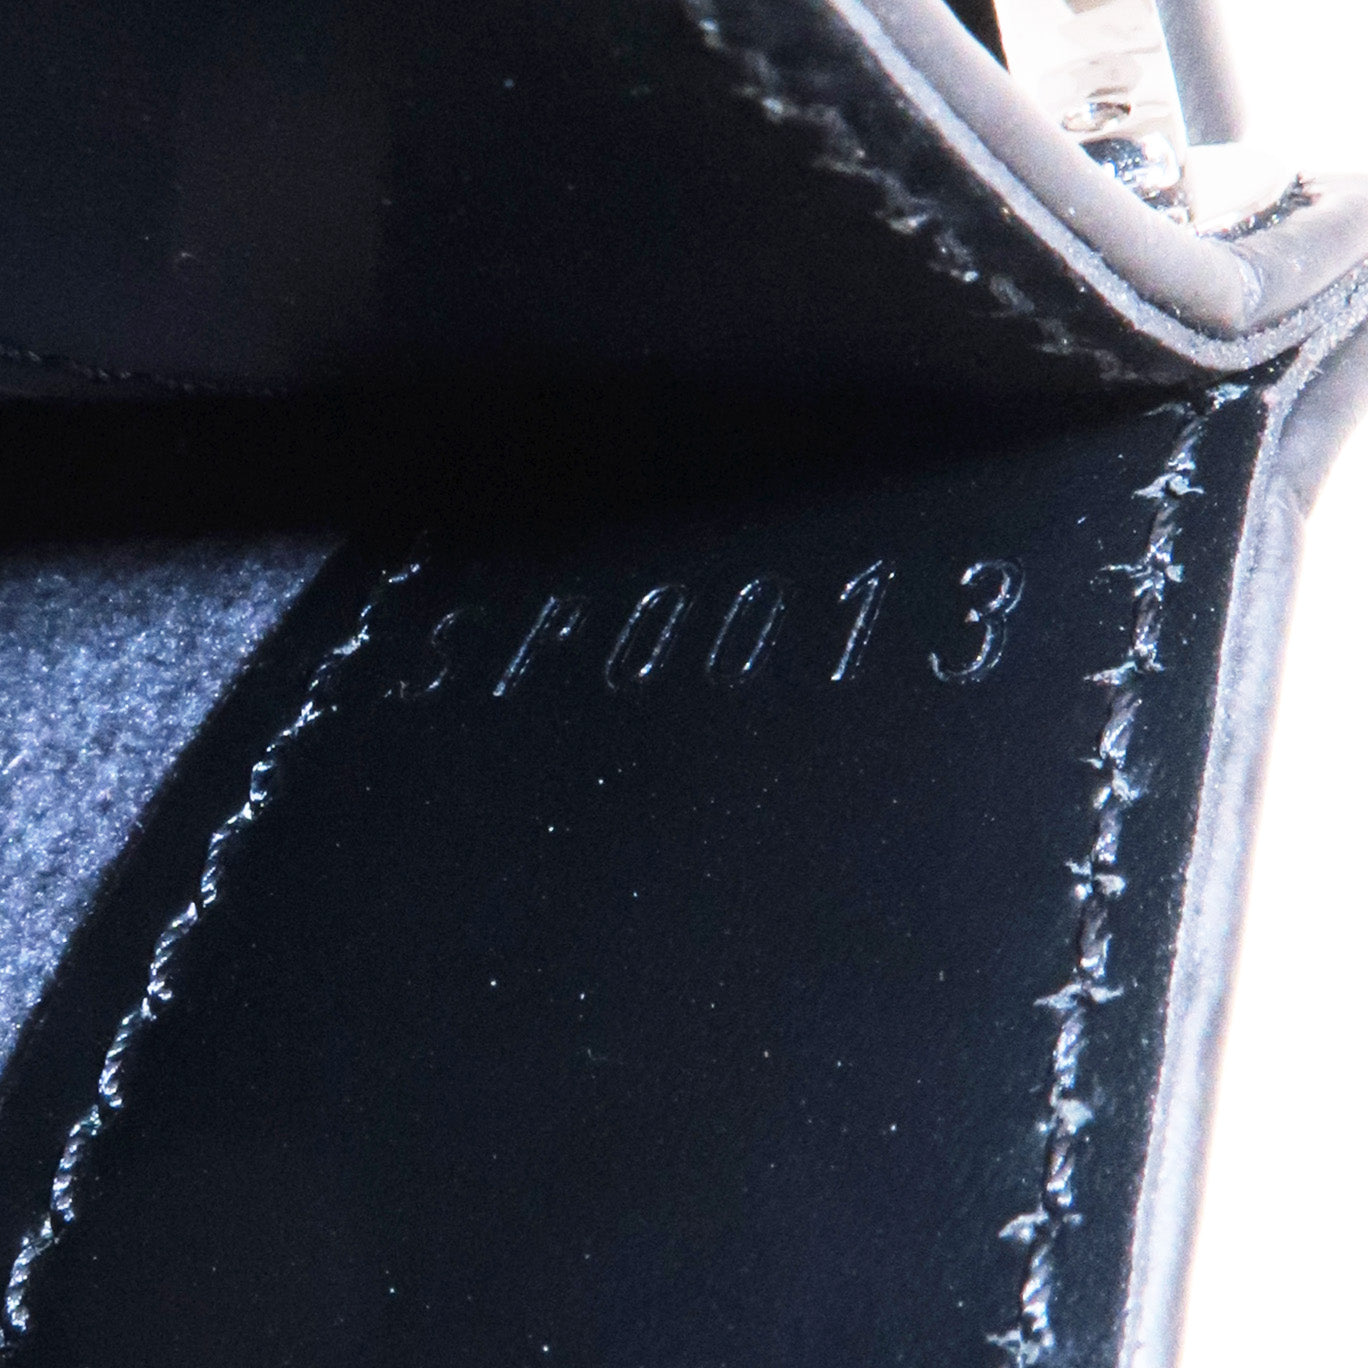 Louis Vuitton Pochette Demi Lune Epi Leather Bag